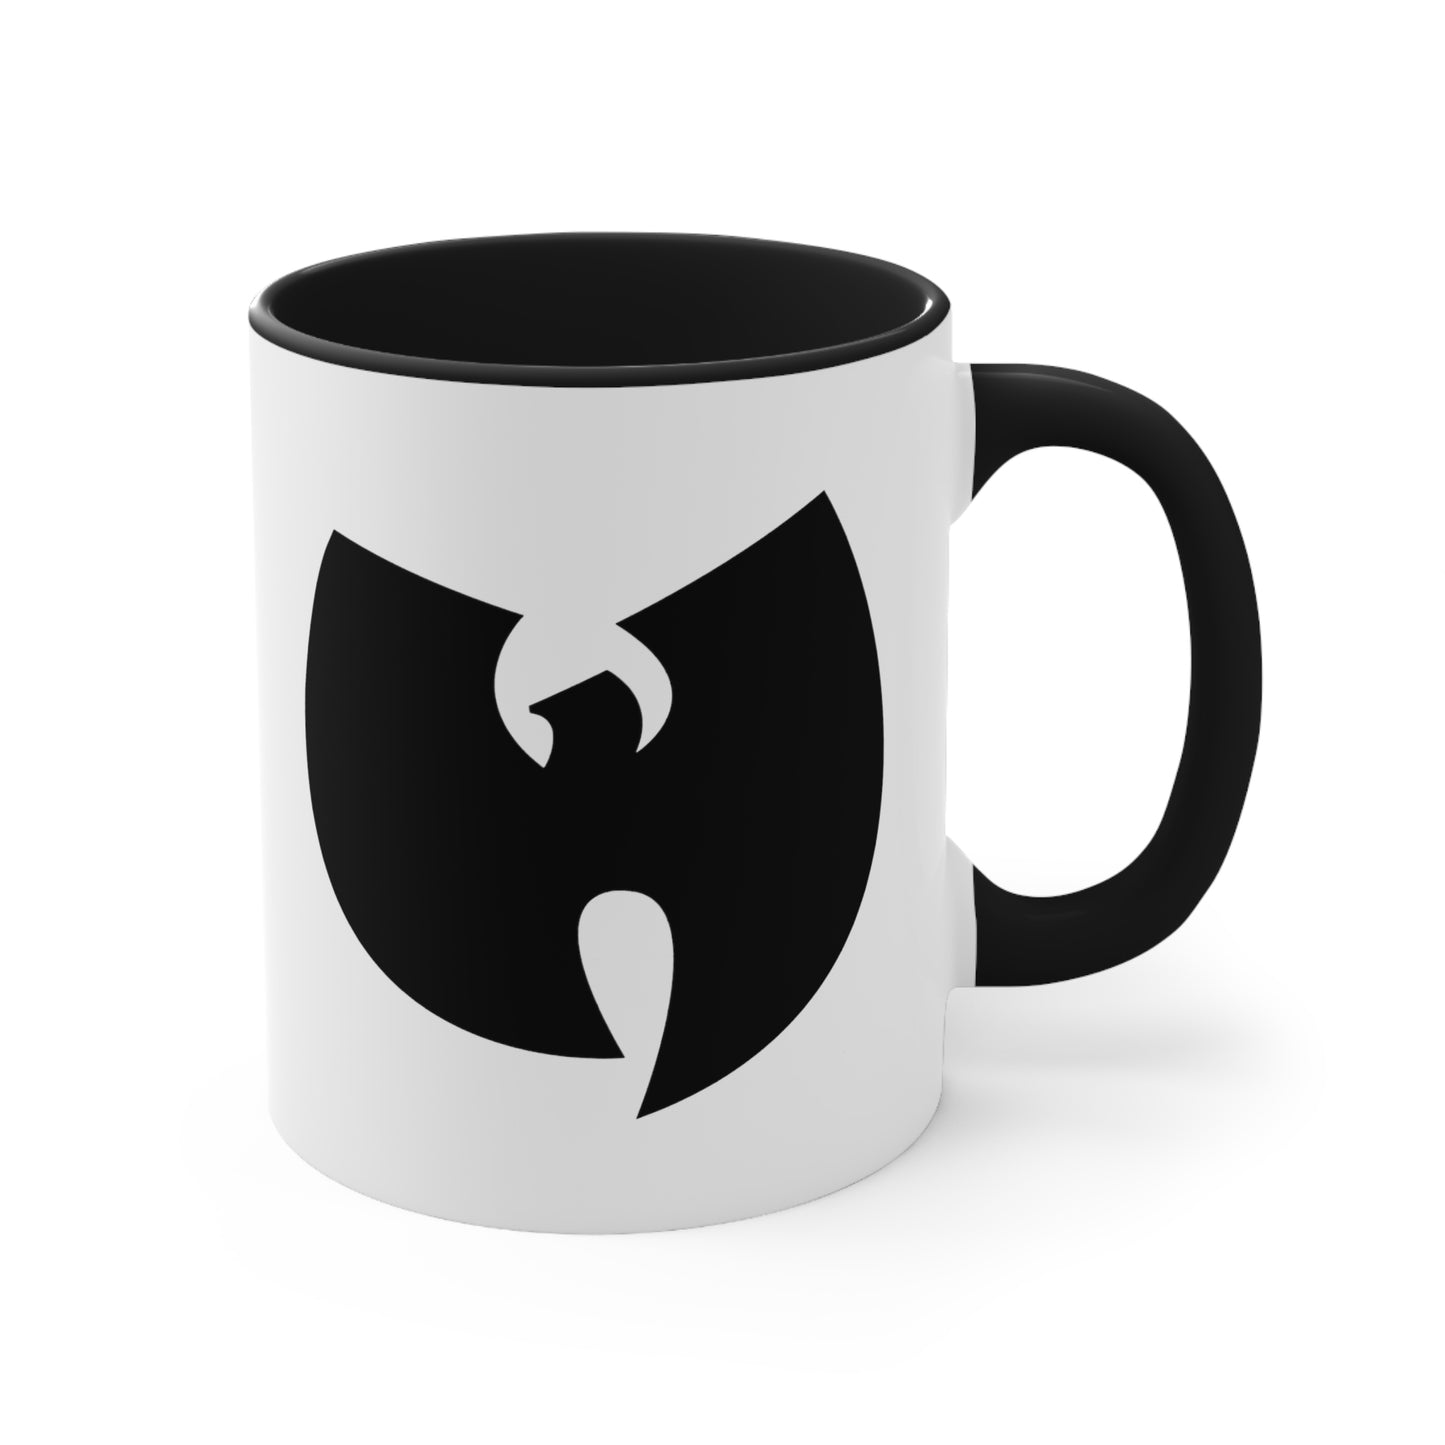 Wu-Tang Black Coffee Mug - Double Sided Black Accent White Ceramic 11oz by TheGlassyLass.com